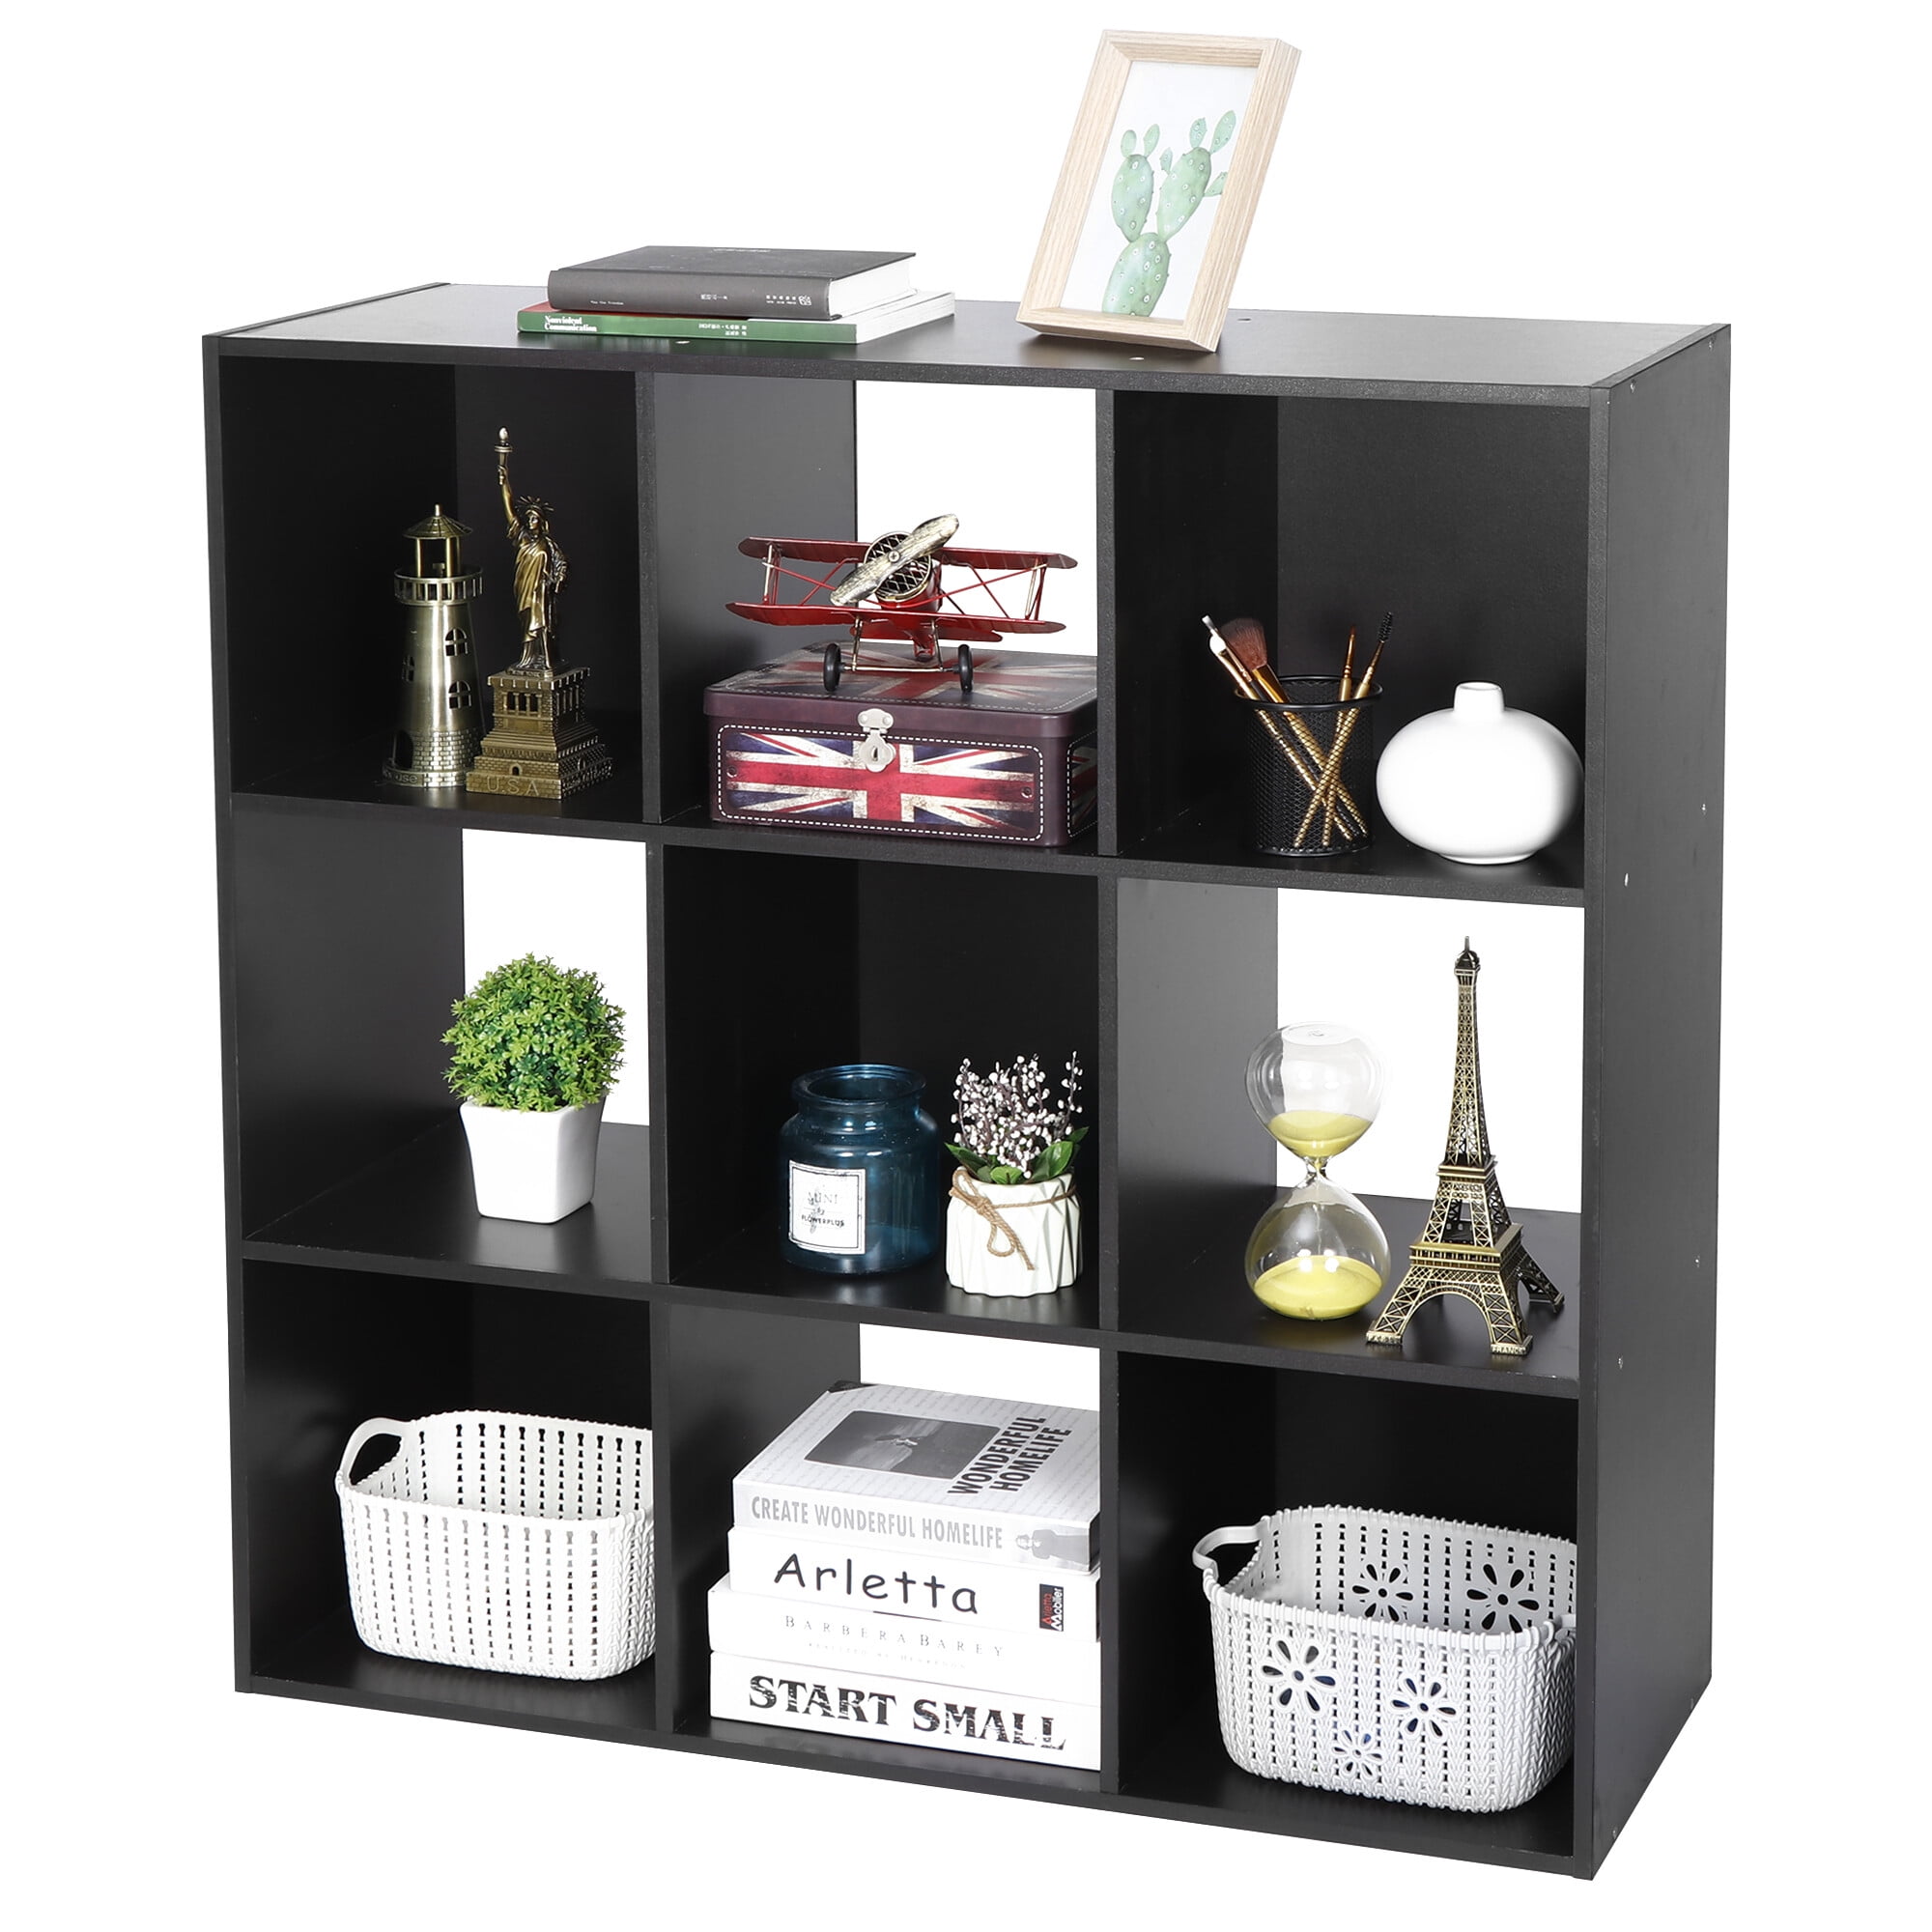 9 CUBE STORAGE Organizer Bookshelf Display Lightweight Home Decor Furniture New 